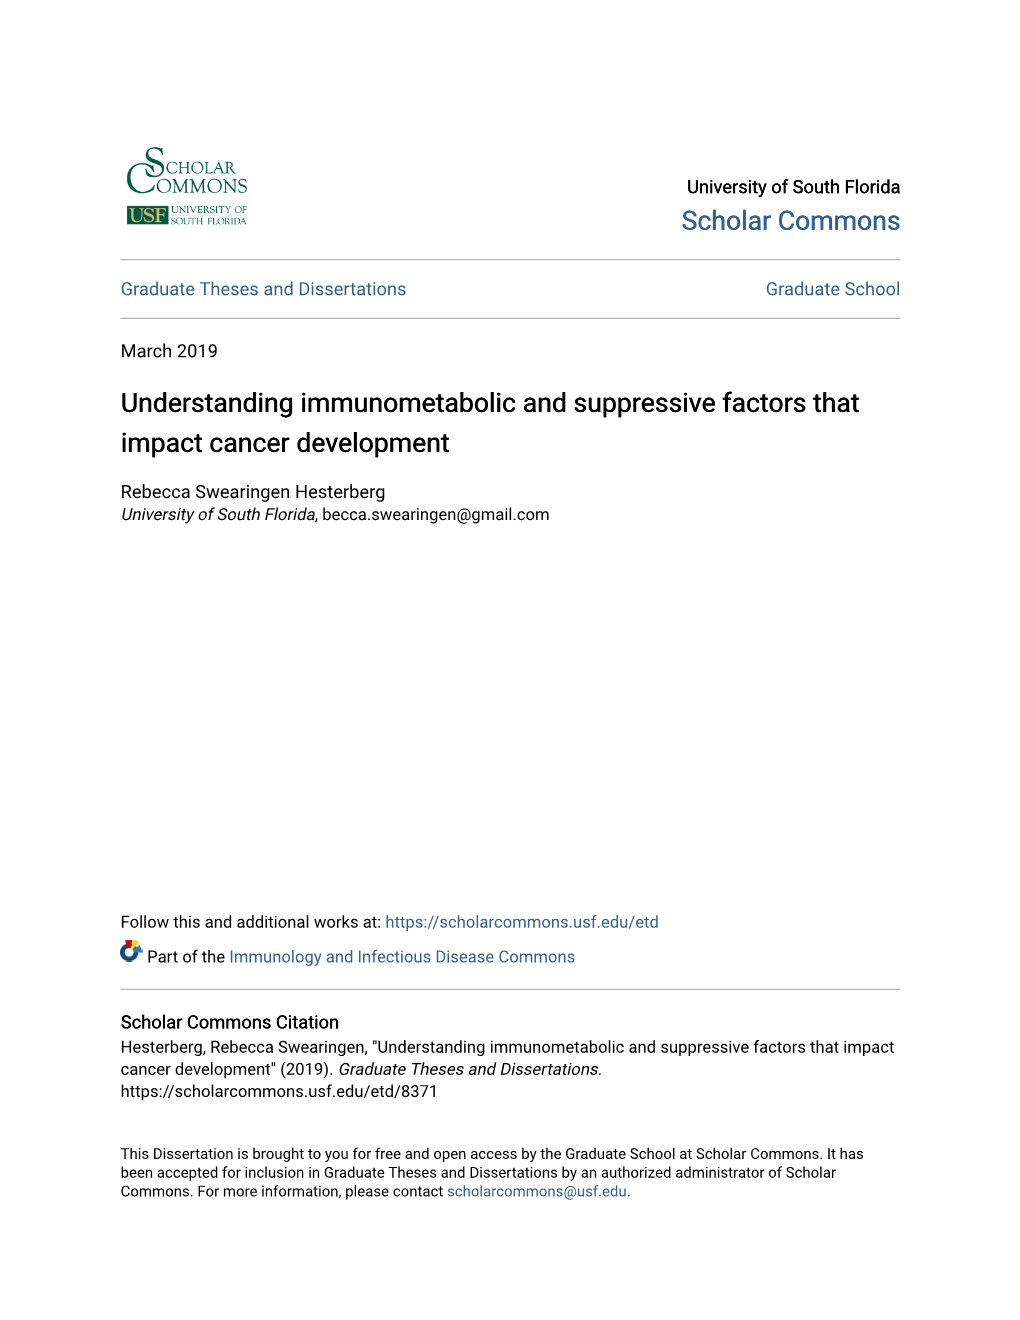 Understanding Immunometabolic and Suppressive Factors That Impact Cancer Development